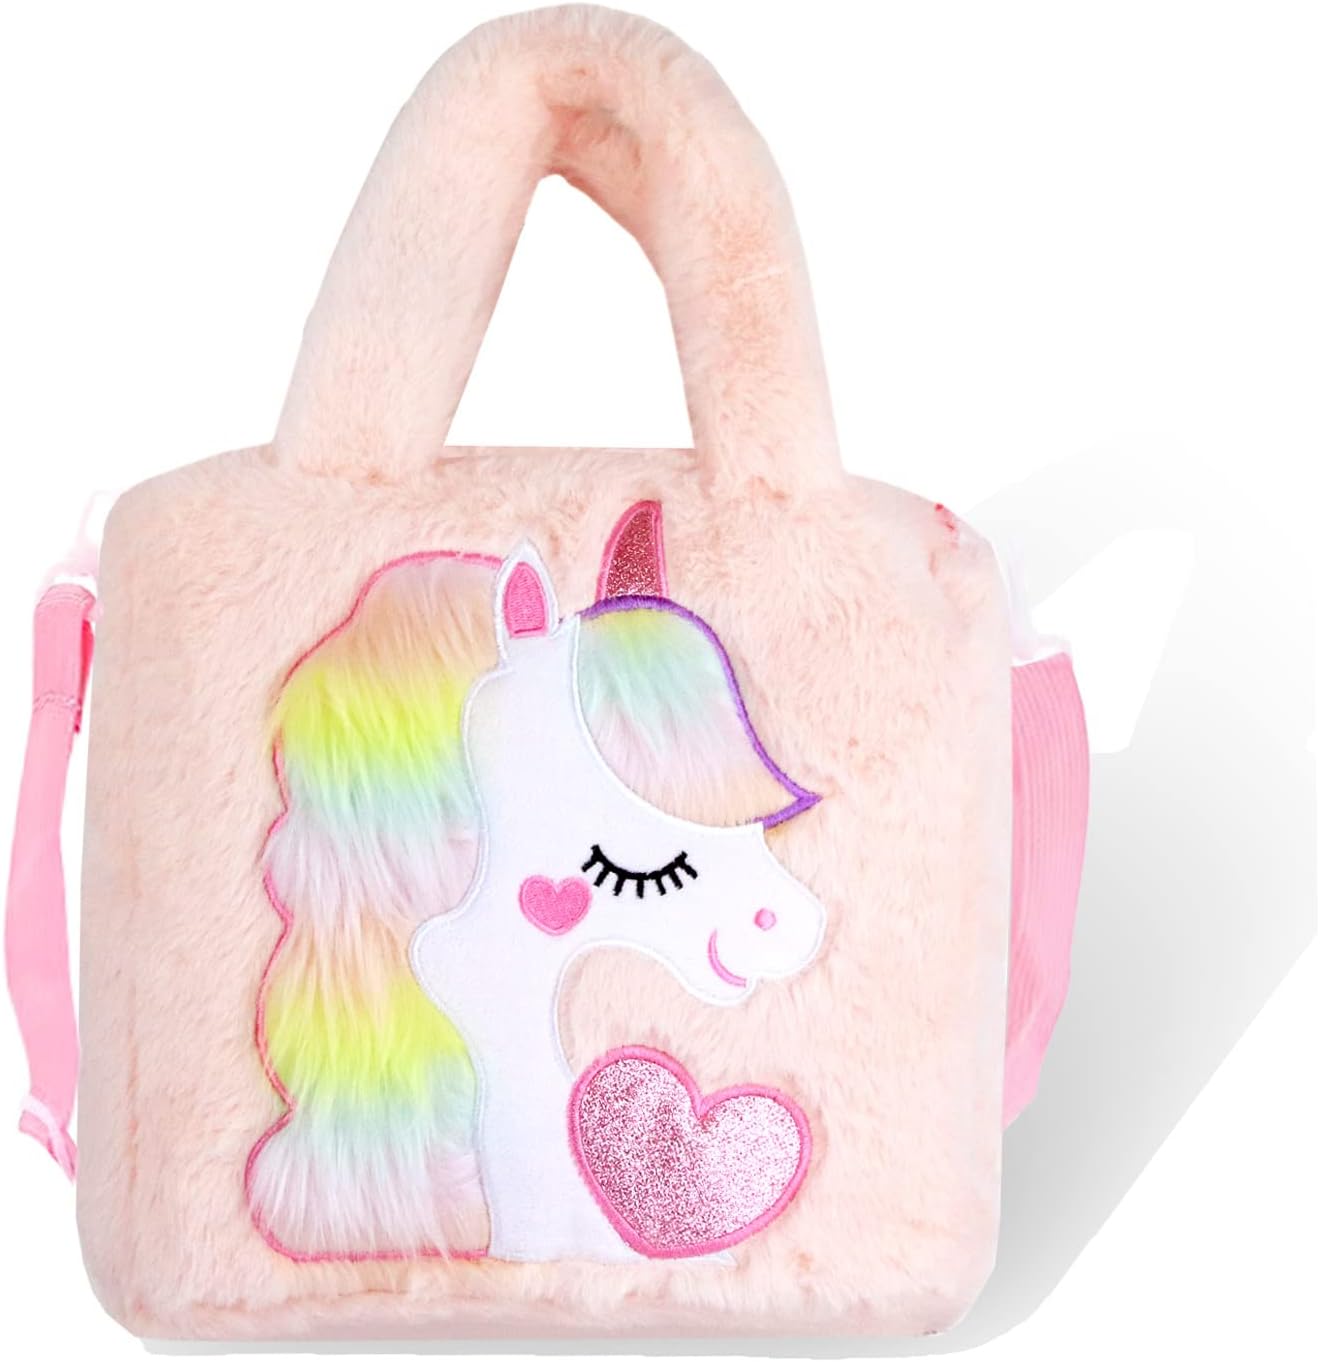 Plush Unicorn Tote Bag Backpack – School Girls Handbag for Travel and Cute Bookbag for Unicorn Party Supplies